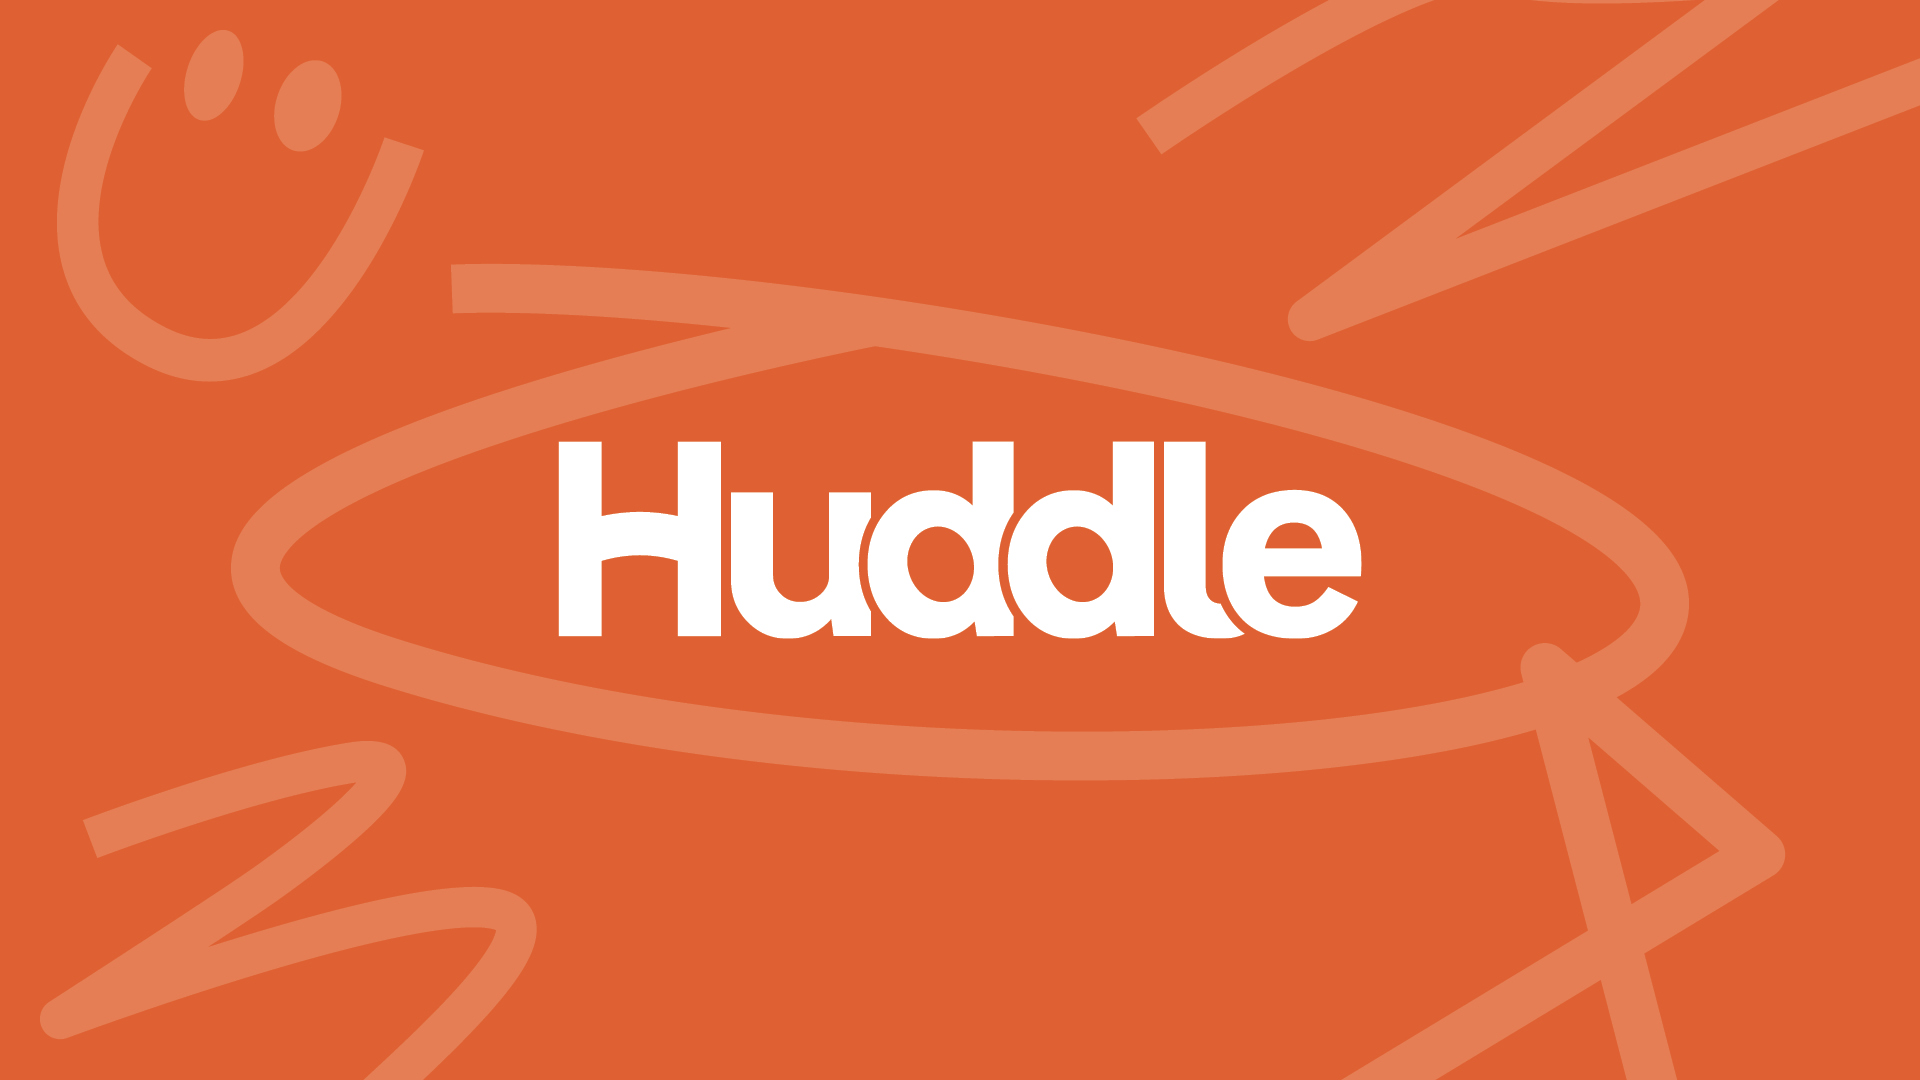 Huddle logo on orange background with doodles all around it